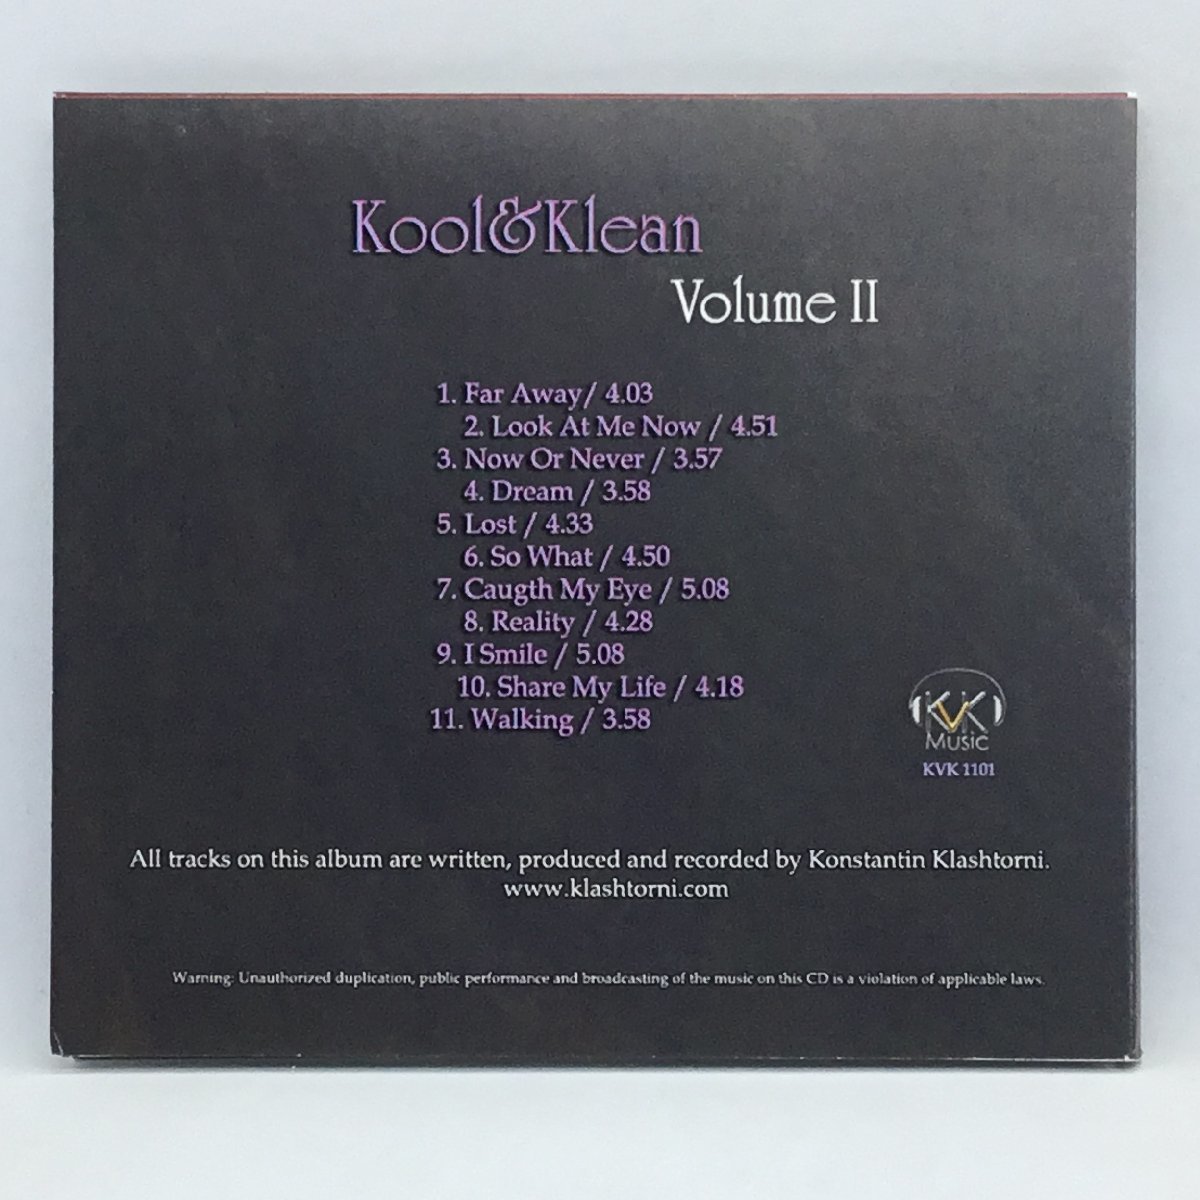 CD-R ◇ クール&クリーン / ヴォリューム・トゥー　(CD) KVK1101　KOOL & KLEAN / VOLUME II_画像2